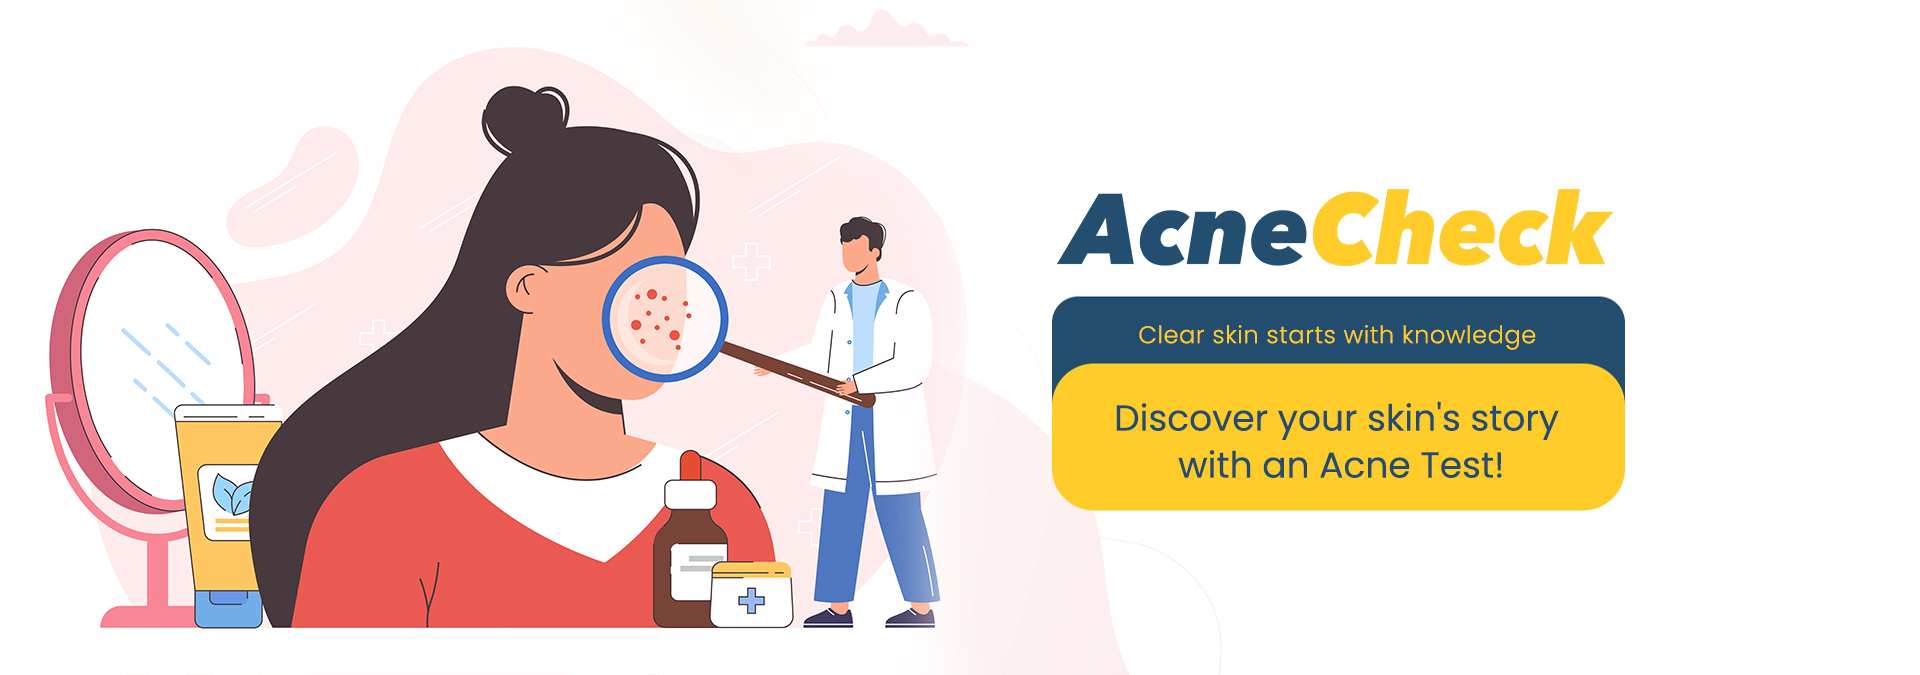 Acne Check Test